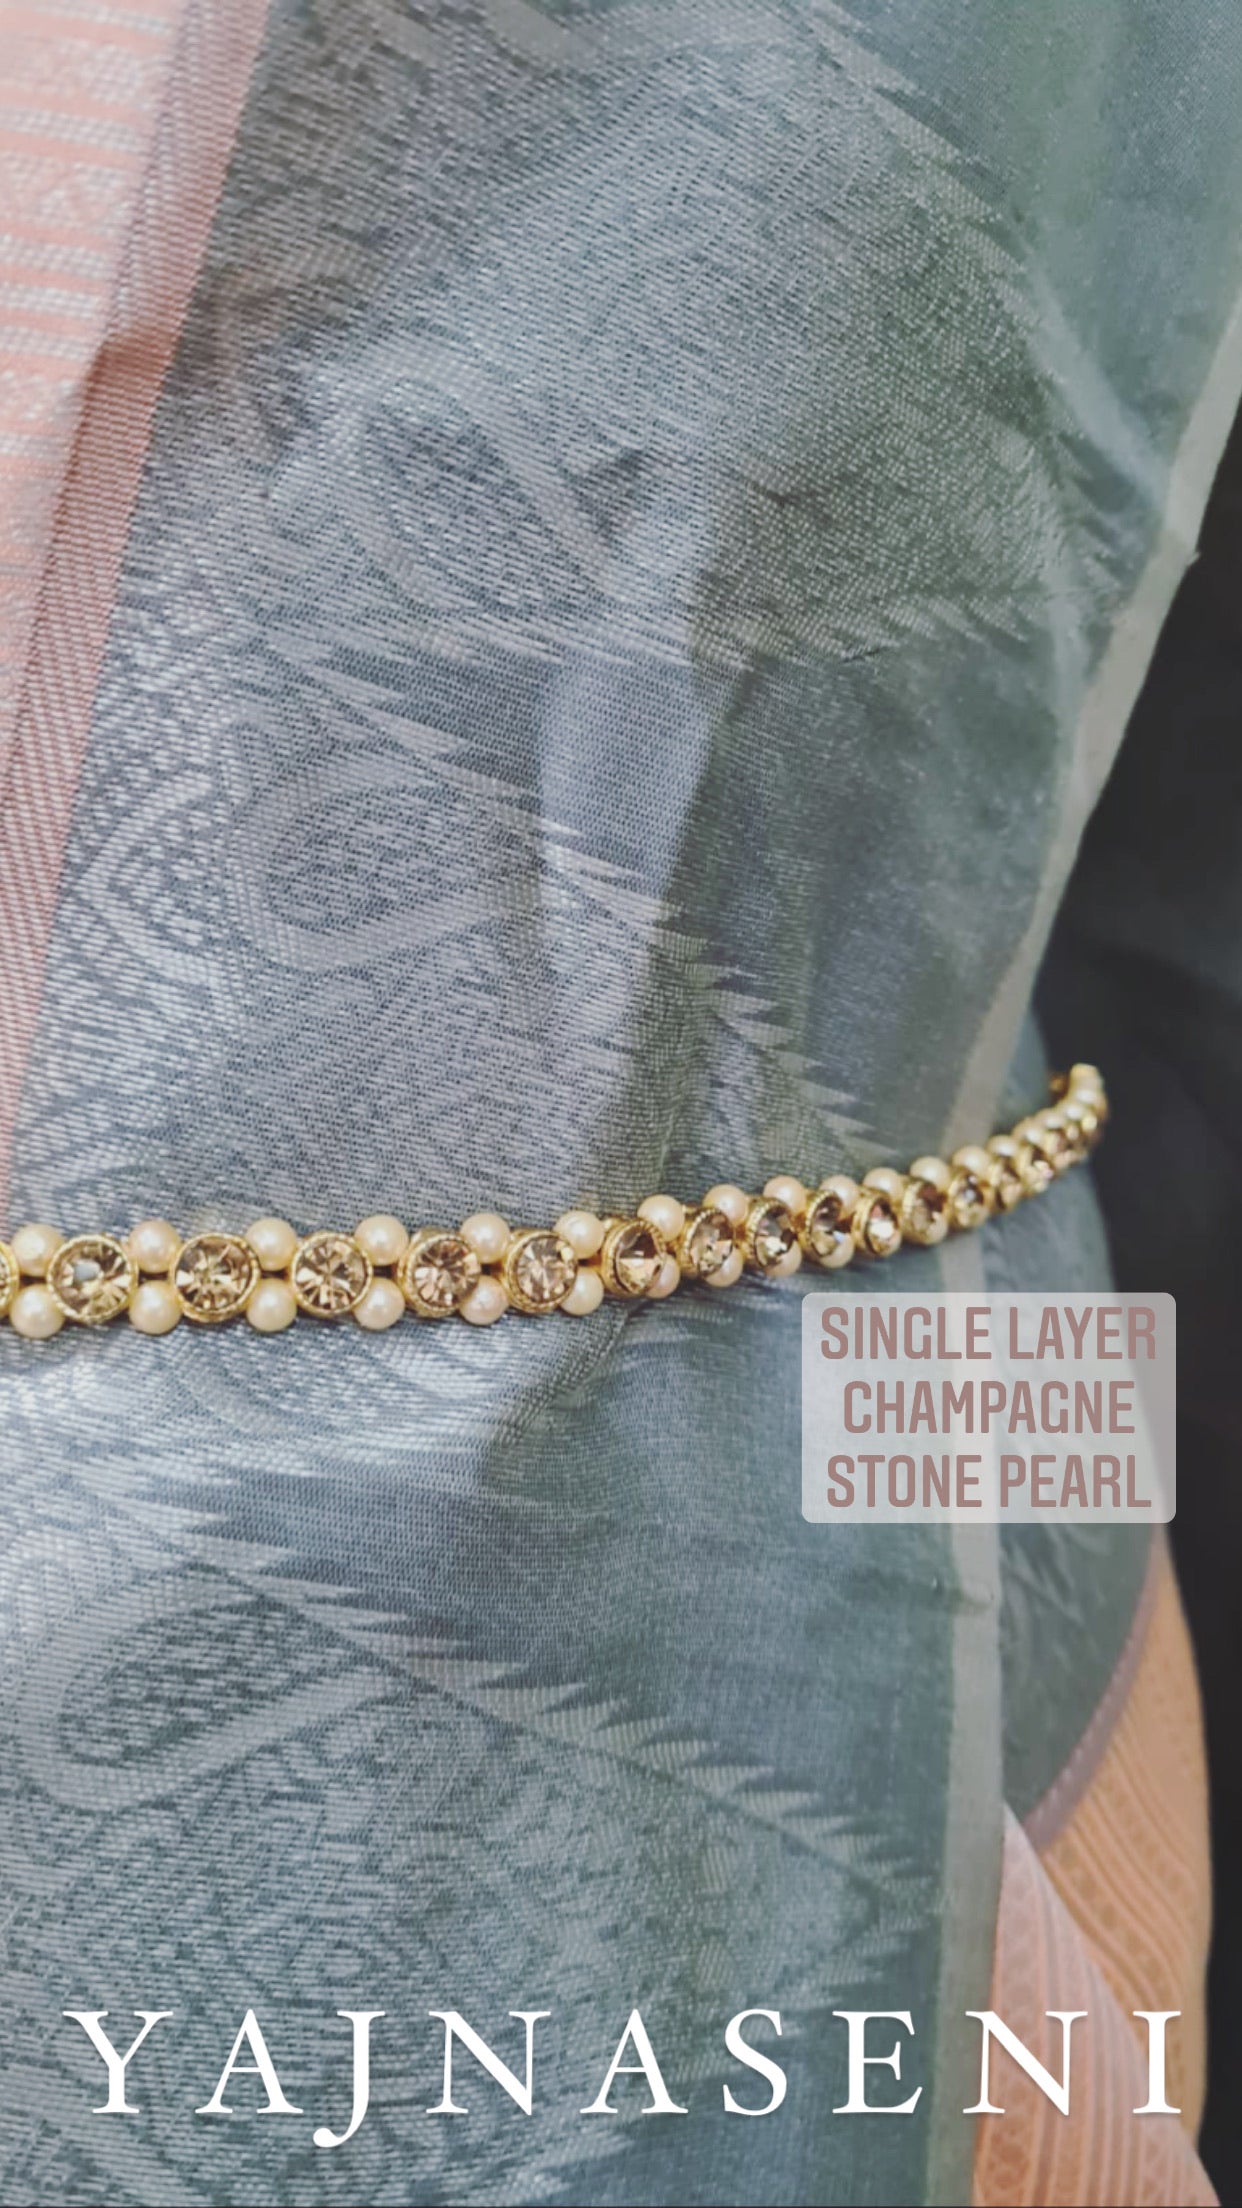 Hipchain - Single layer champagne stone pearl